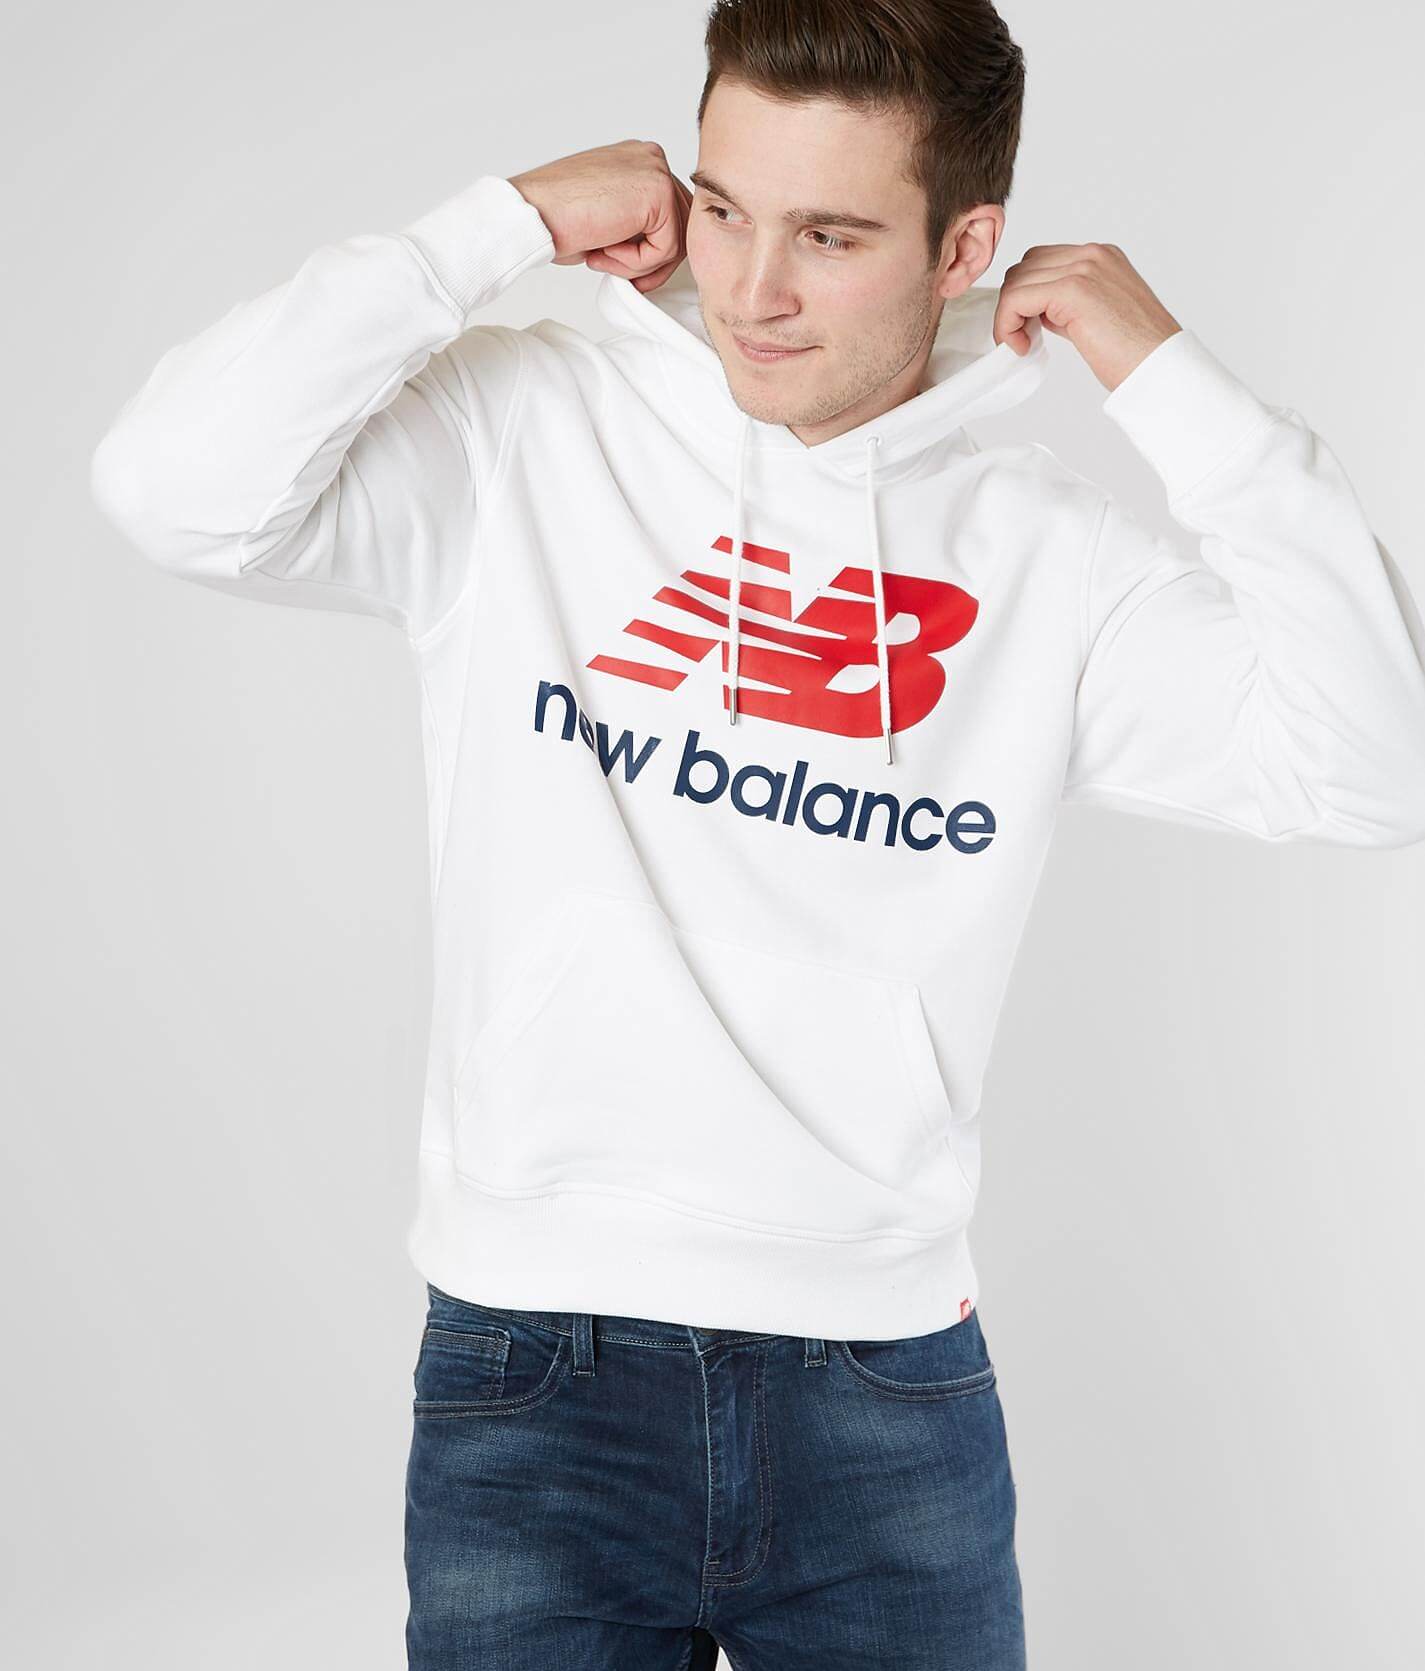 new balance sweatshirt mens